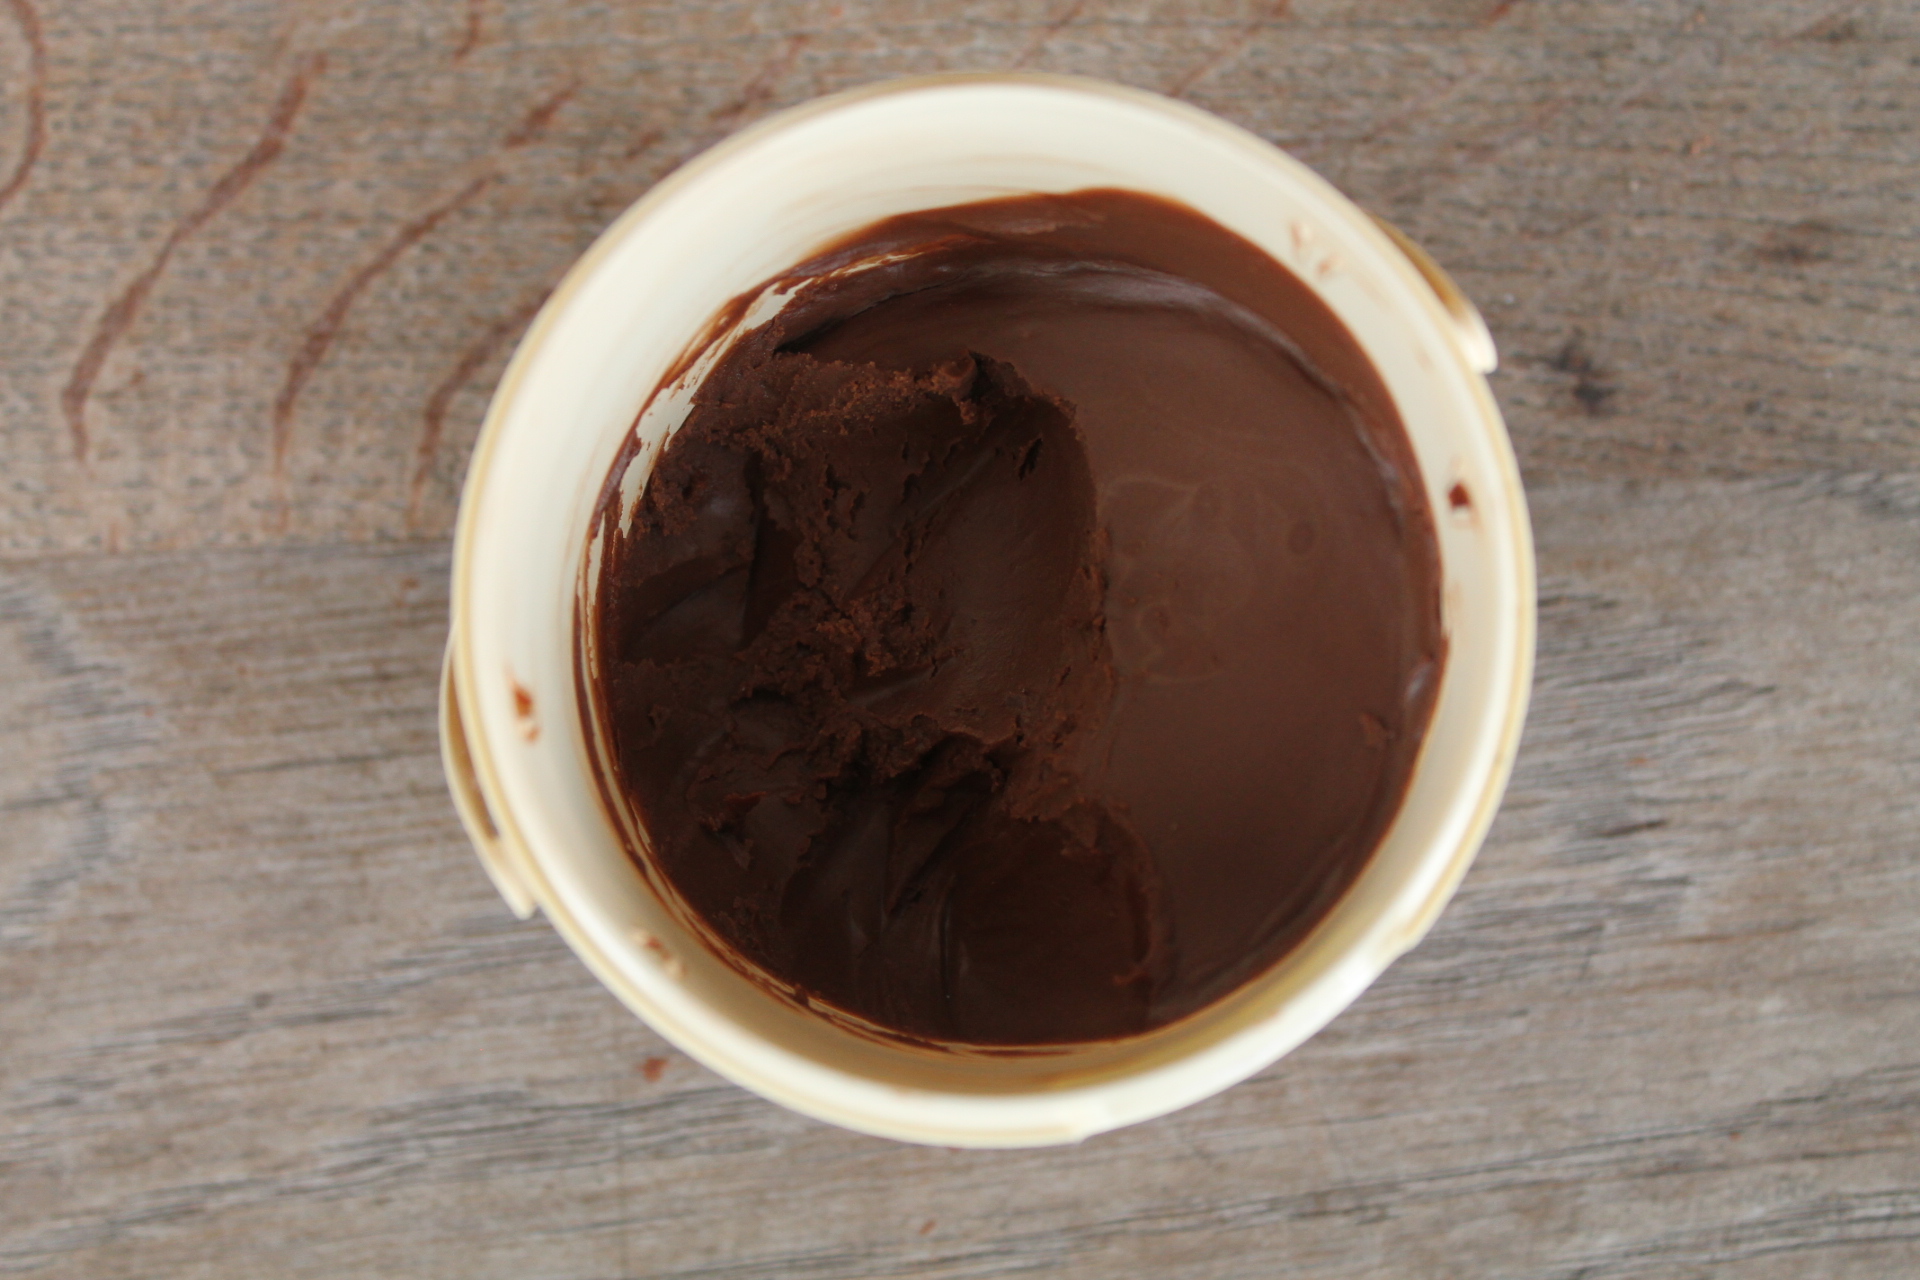 TOP CHOCO - Premium Chocolate Spread consistance 